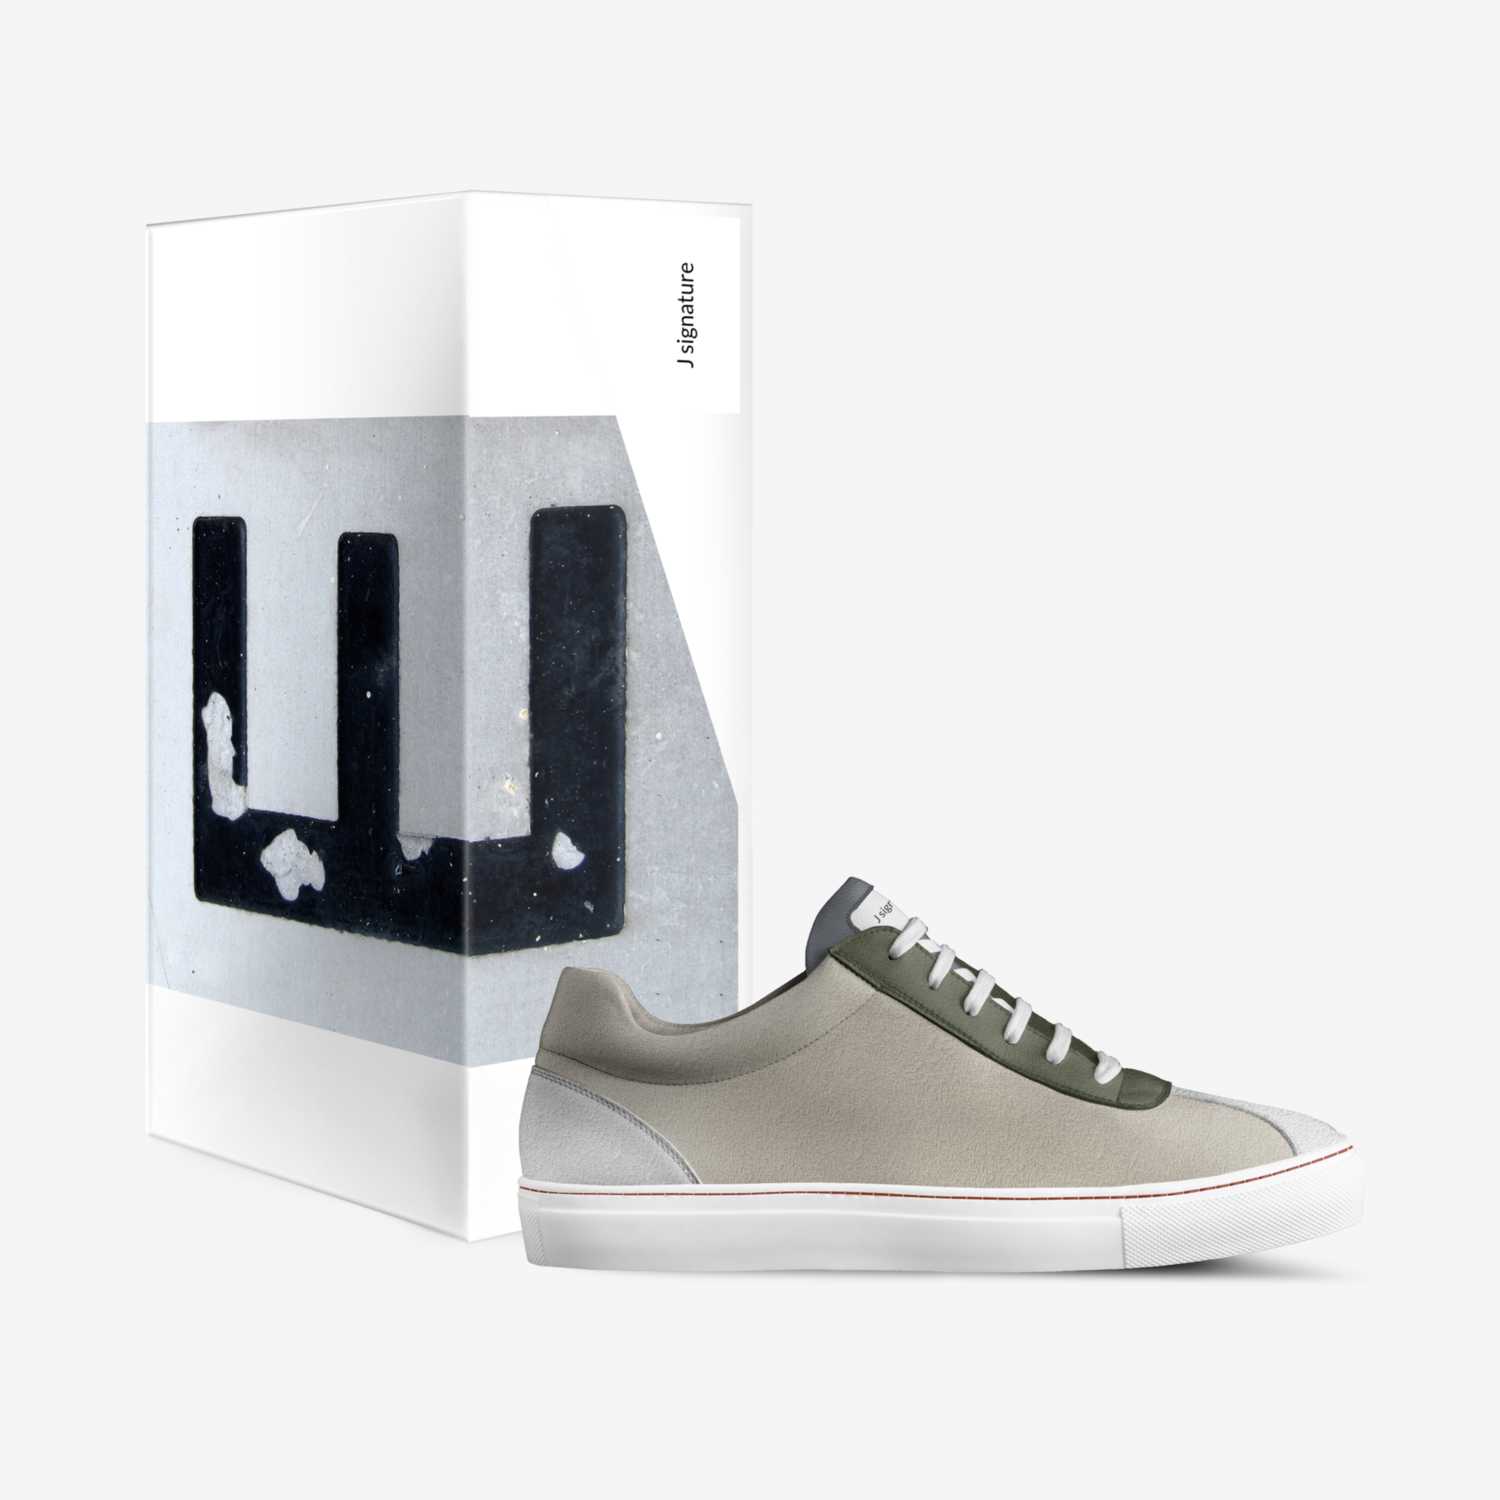 J signature custom made in Italy shoes by Jordan Nichols | Box view